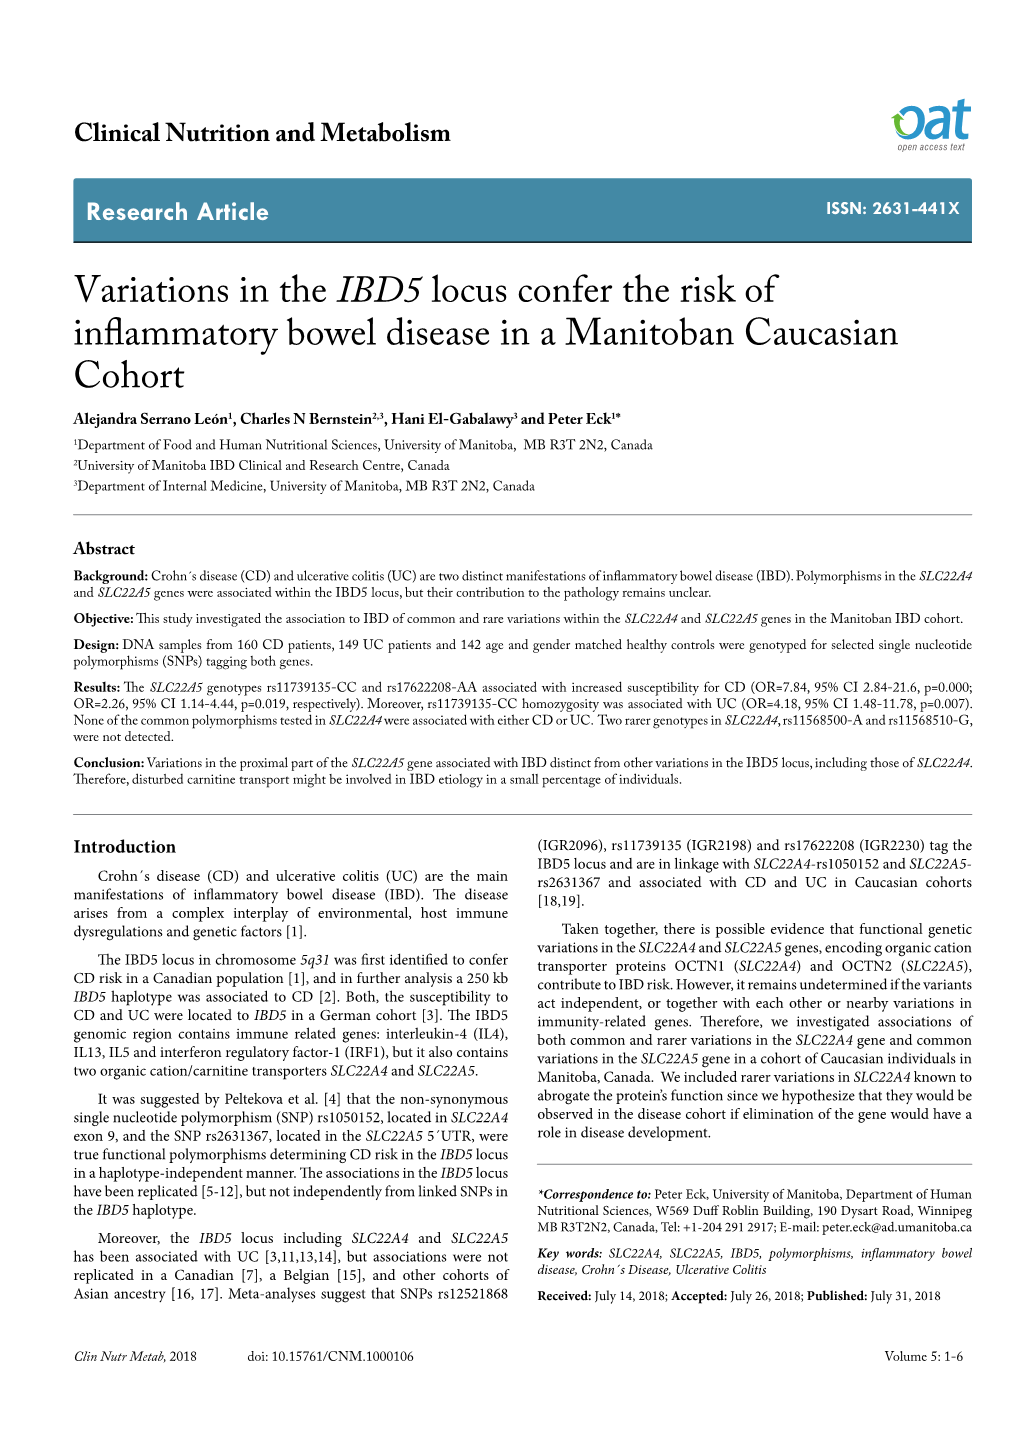 Variations in the IBD5 Locus Confer the Risk of Inflammatory Bowel Disease